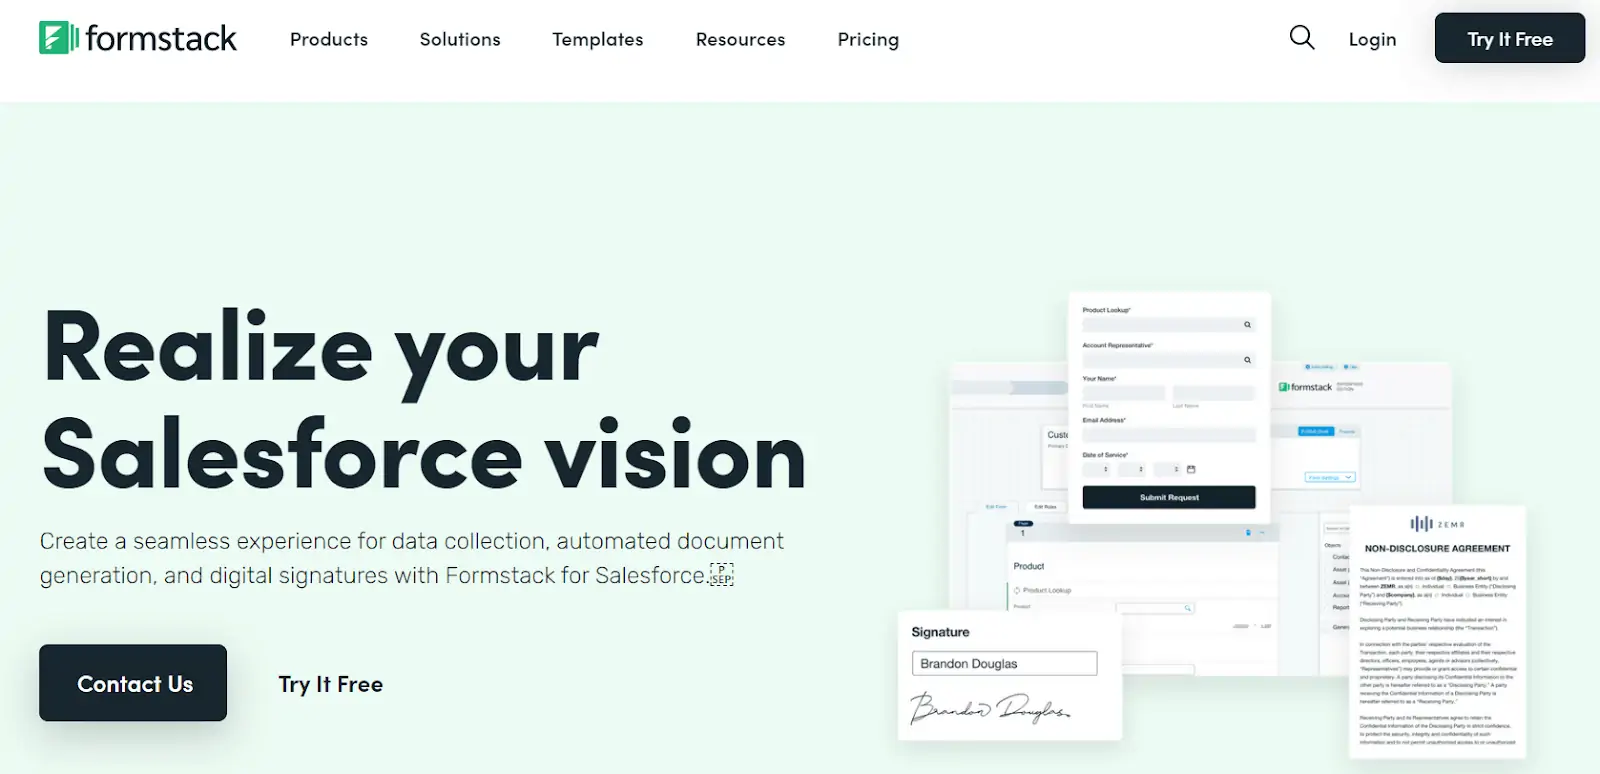 2. Formstack Salesforce integration tool